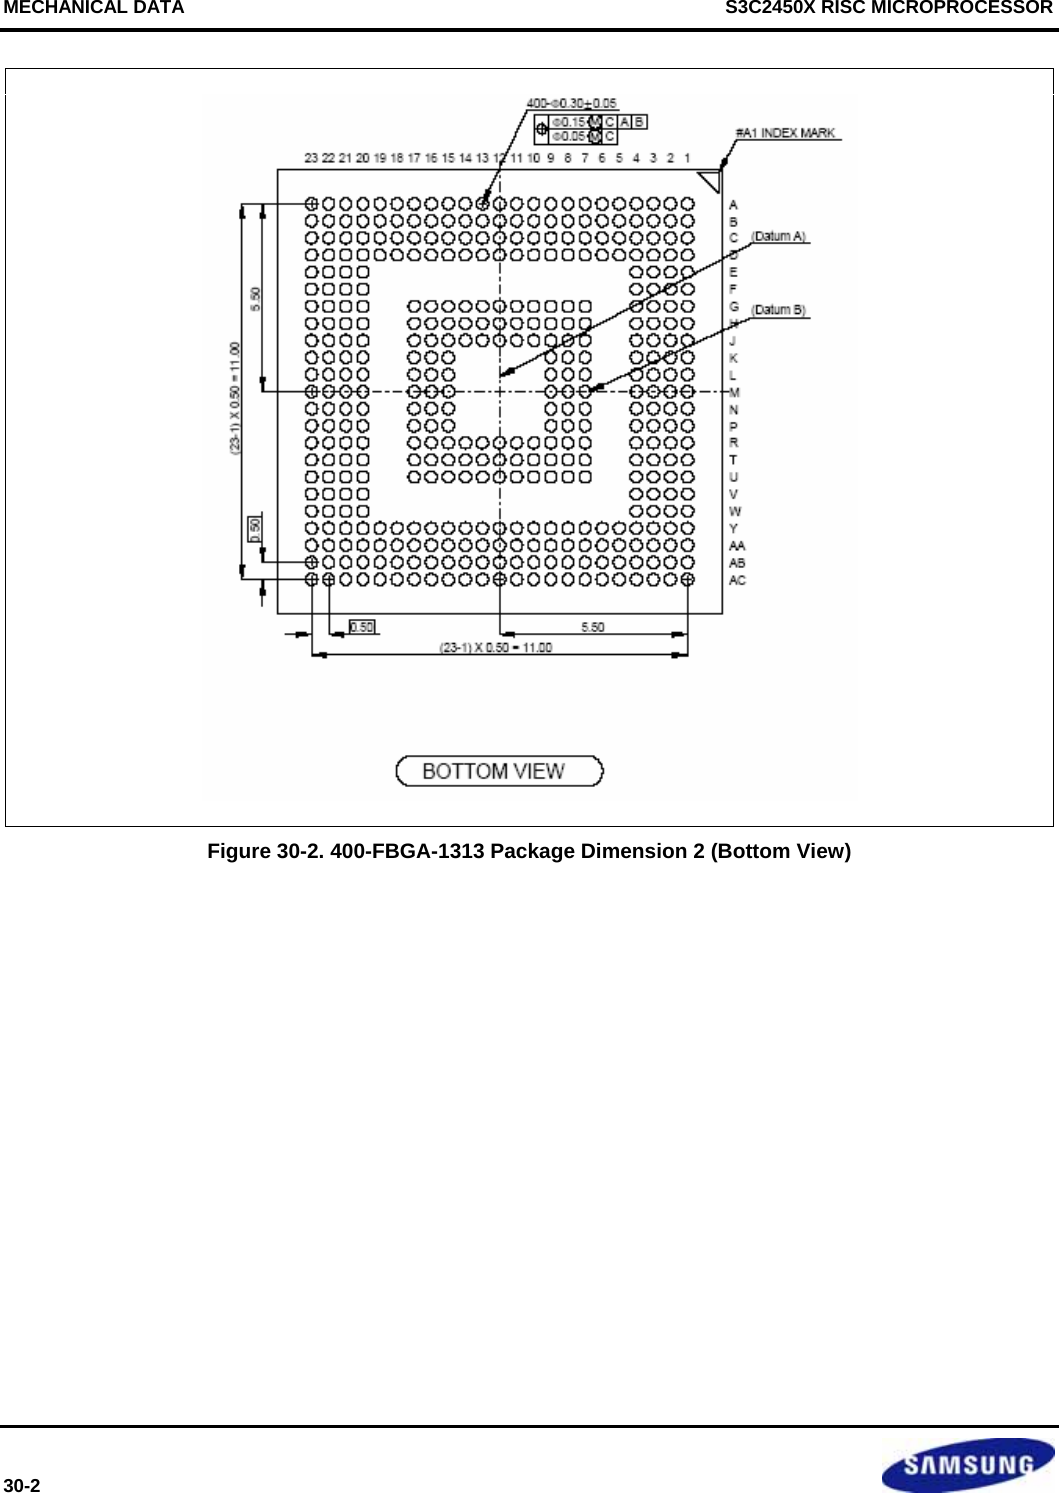 MECHANICAL DATA     S3C2450X RISC MICROPROCESSOR 30-2      Figure 30-2. 400-FBGA-1313 Package Dimension 2 (Bottom View)        